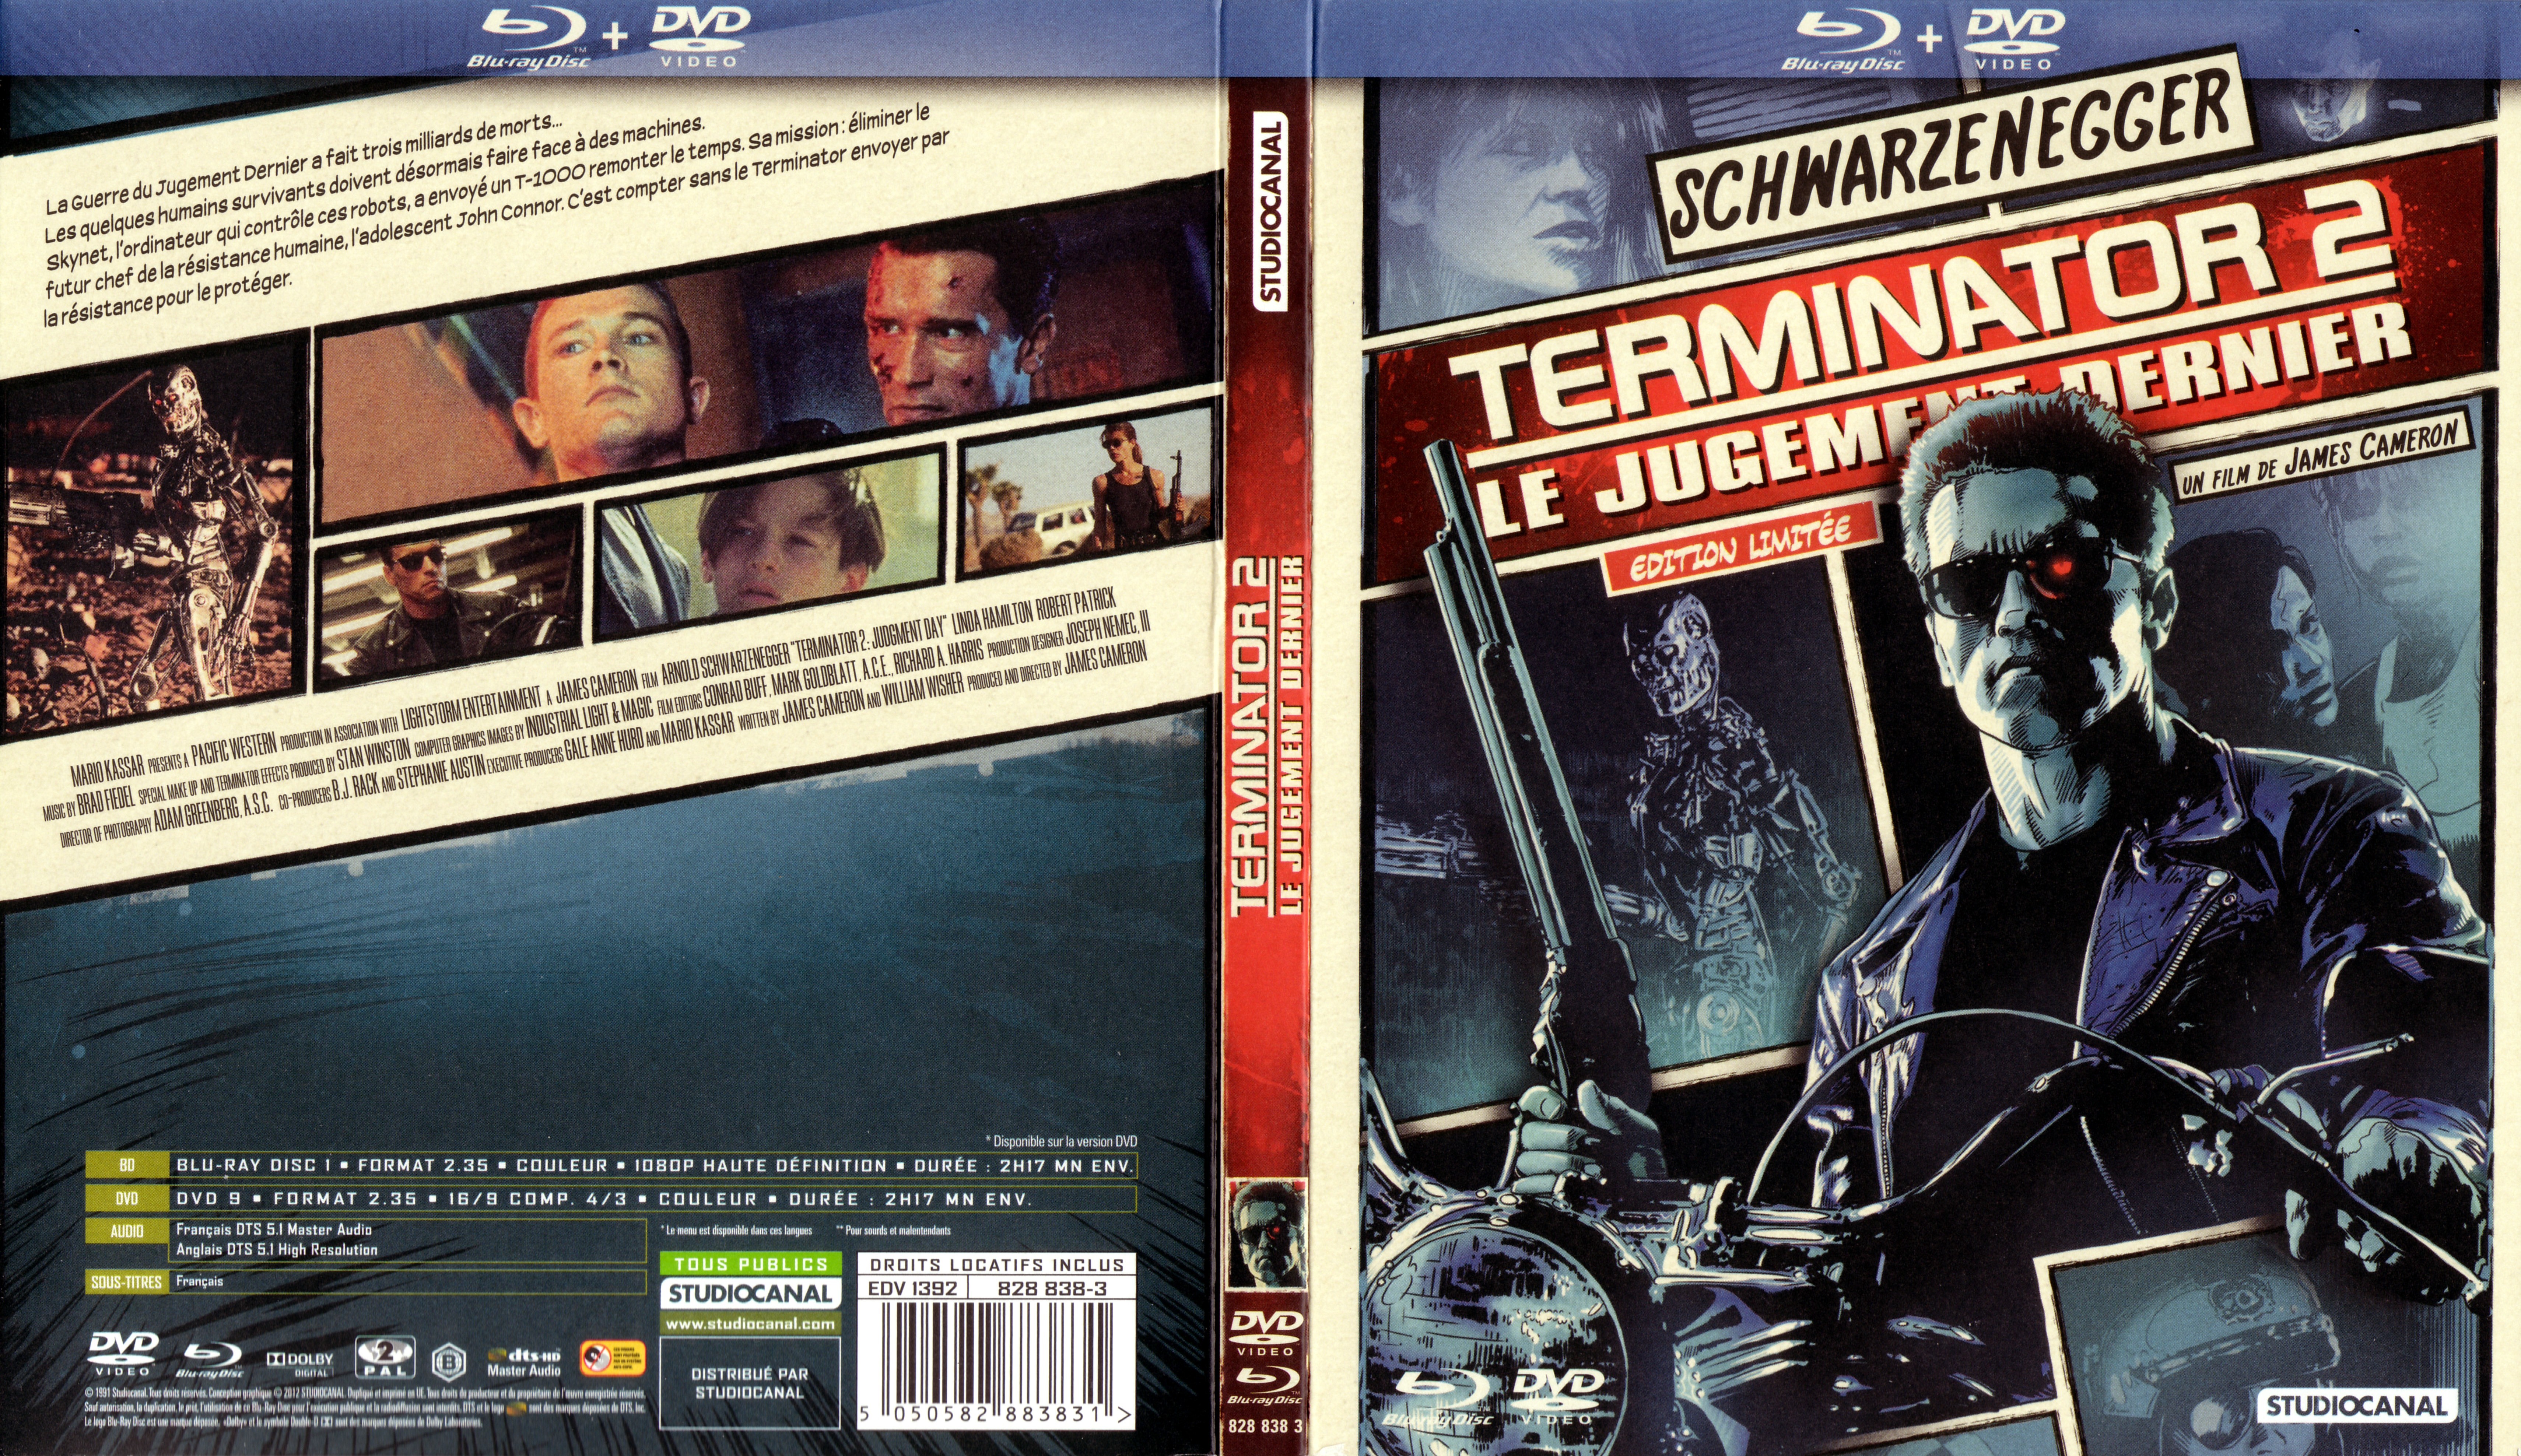 Jaquette DVD de Terminator 2 (BLU-RAY) v3 - Cinéma Passion